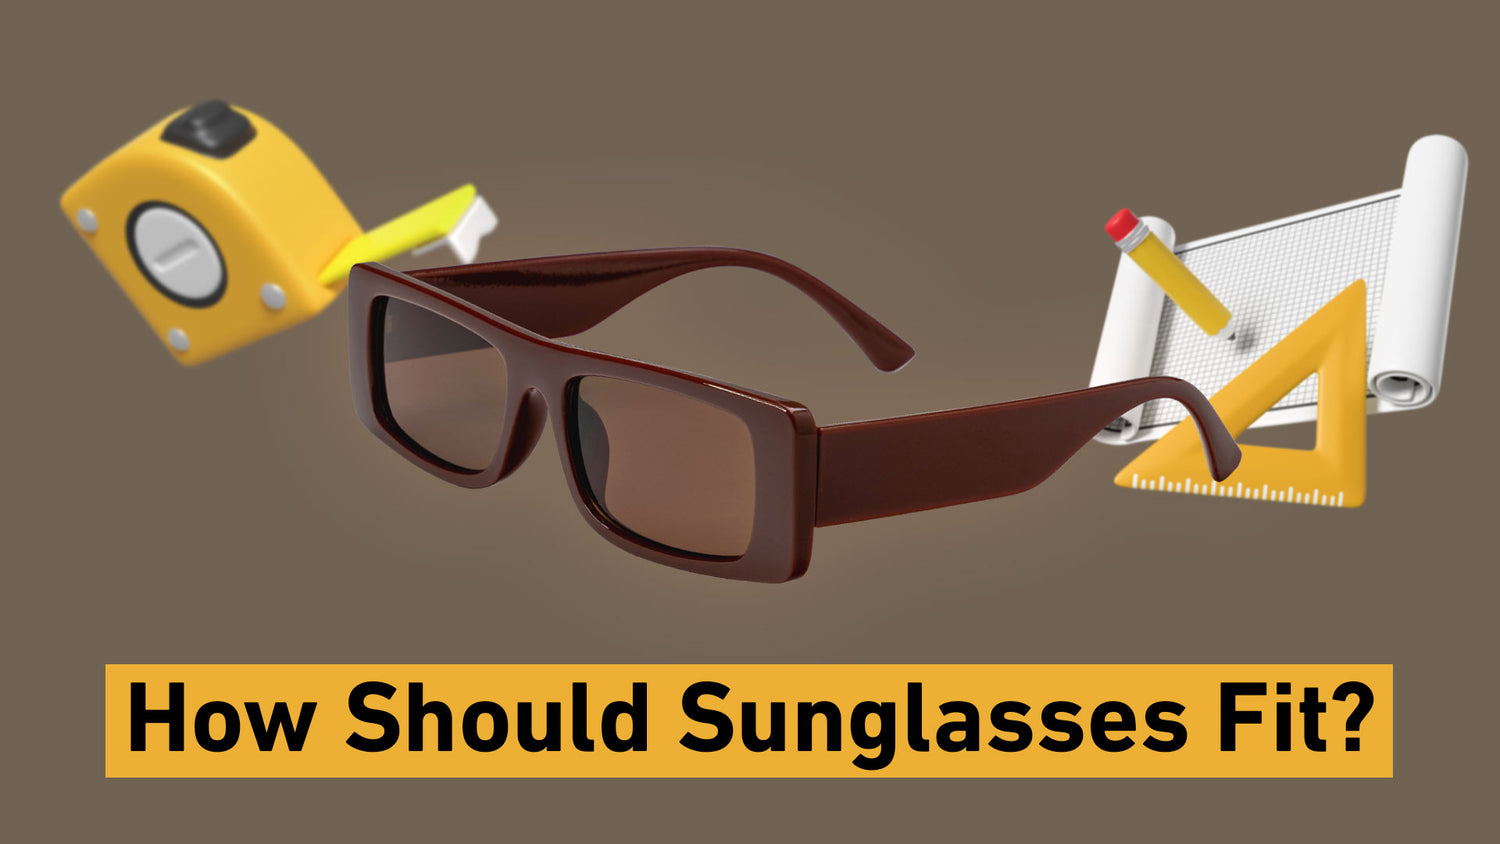 How Should Sunglasses Fit?